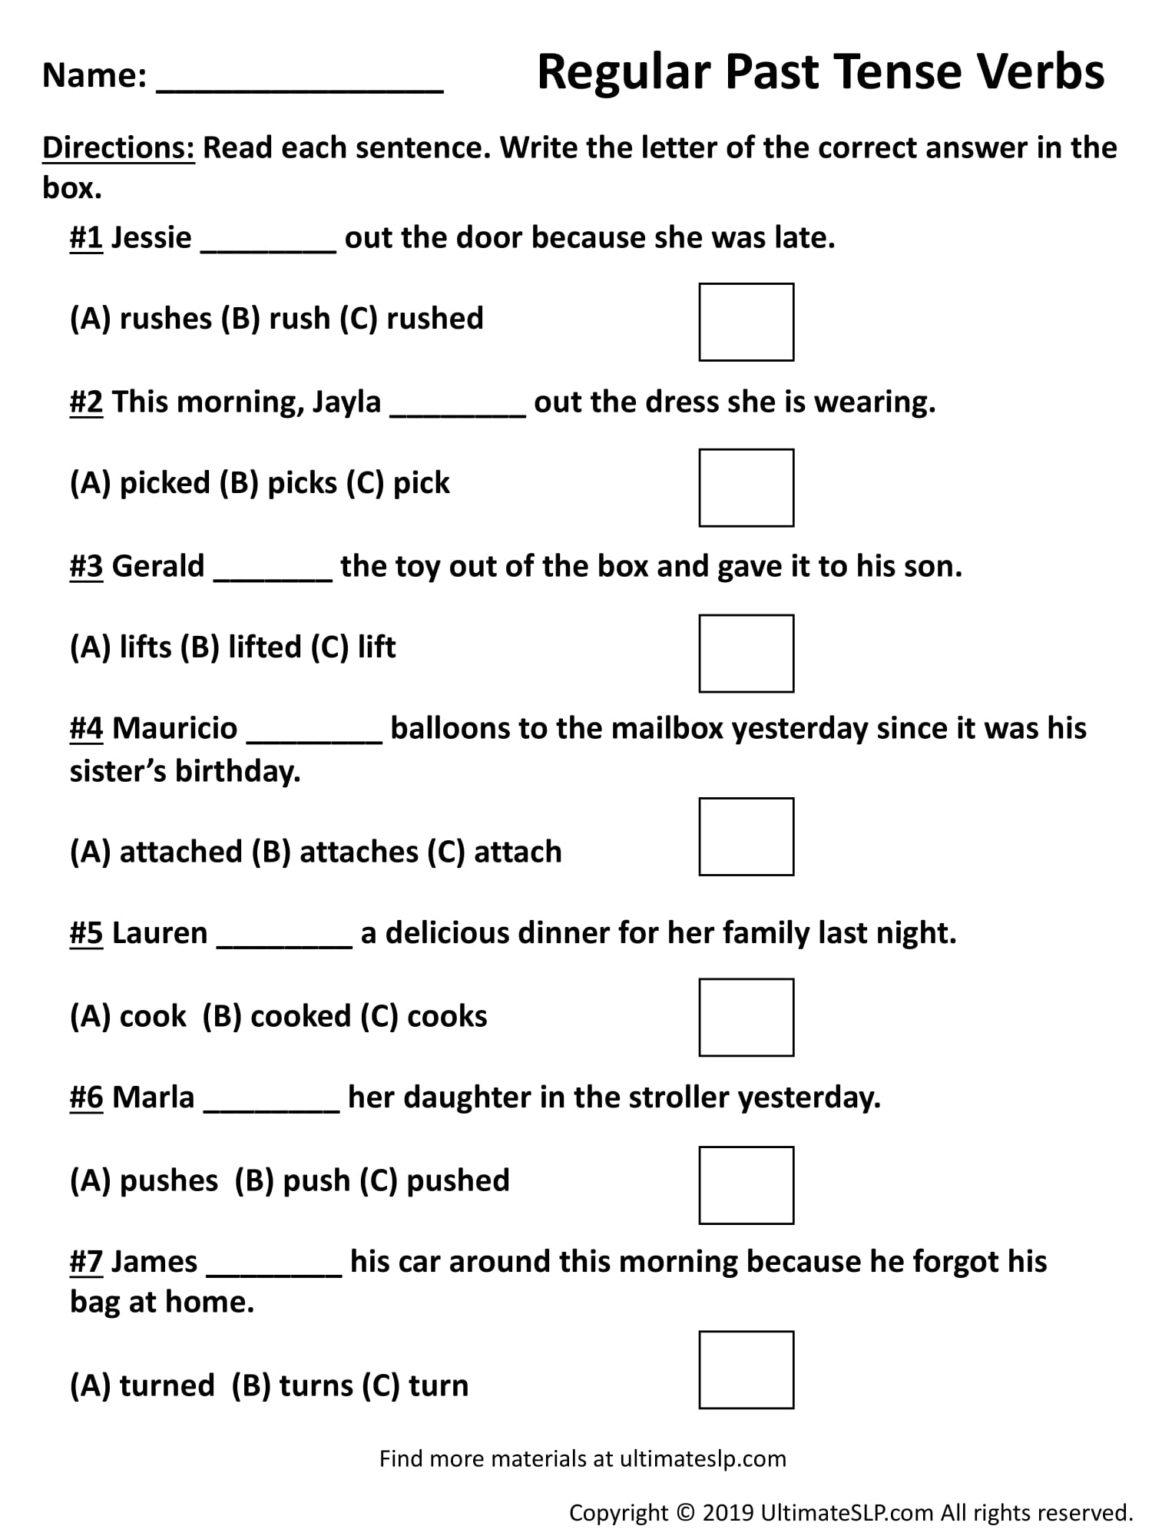 Making Verbs Regular Past Tense Worksheets